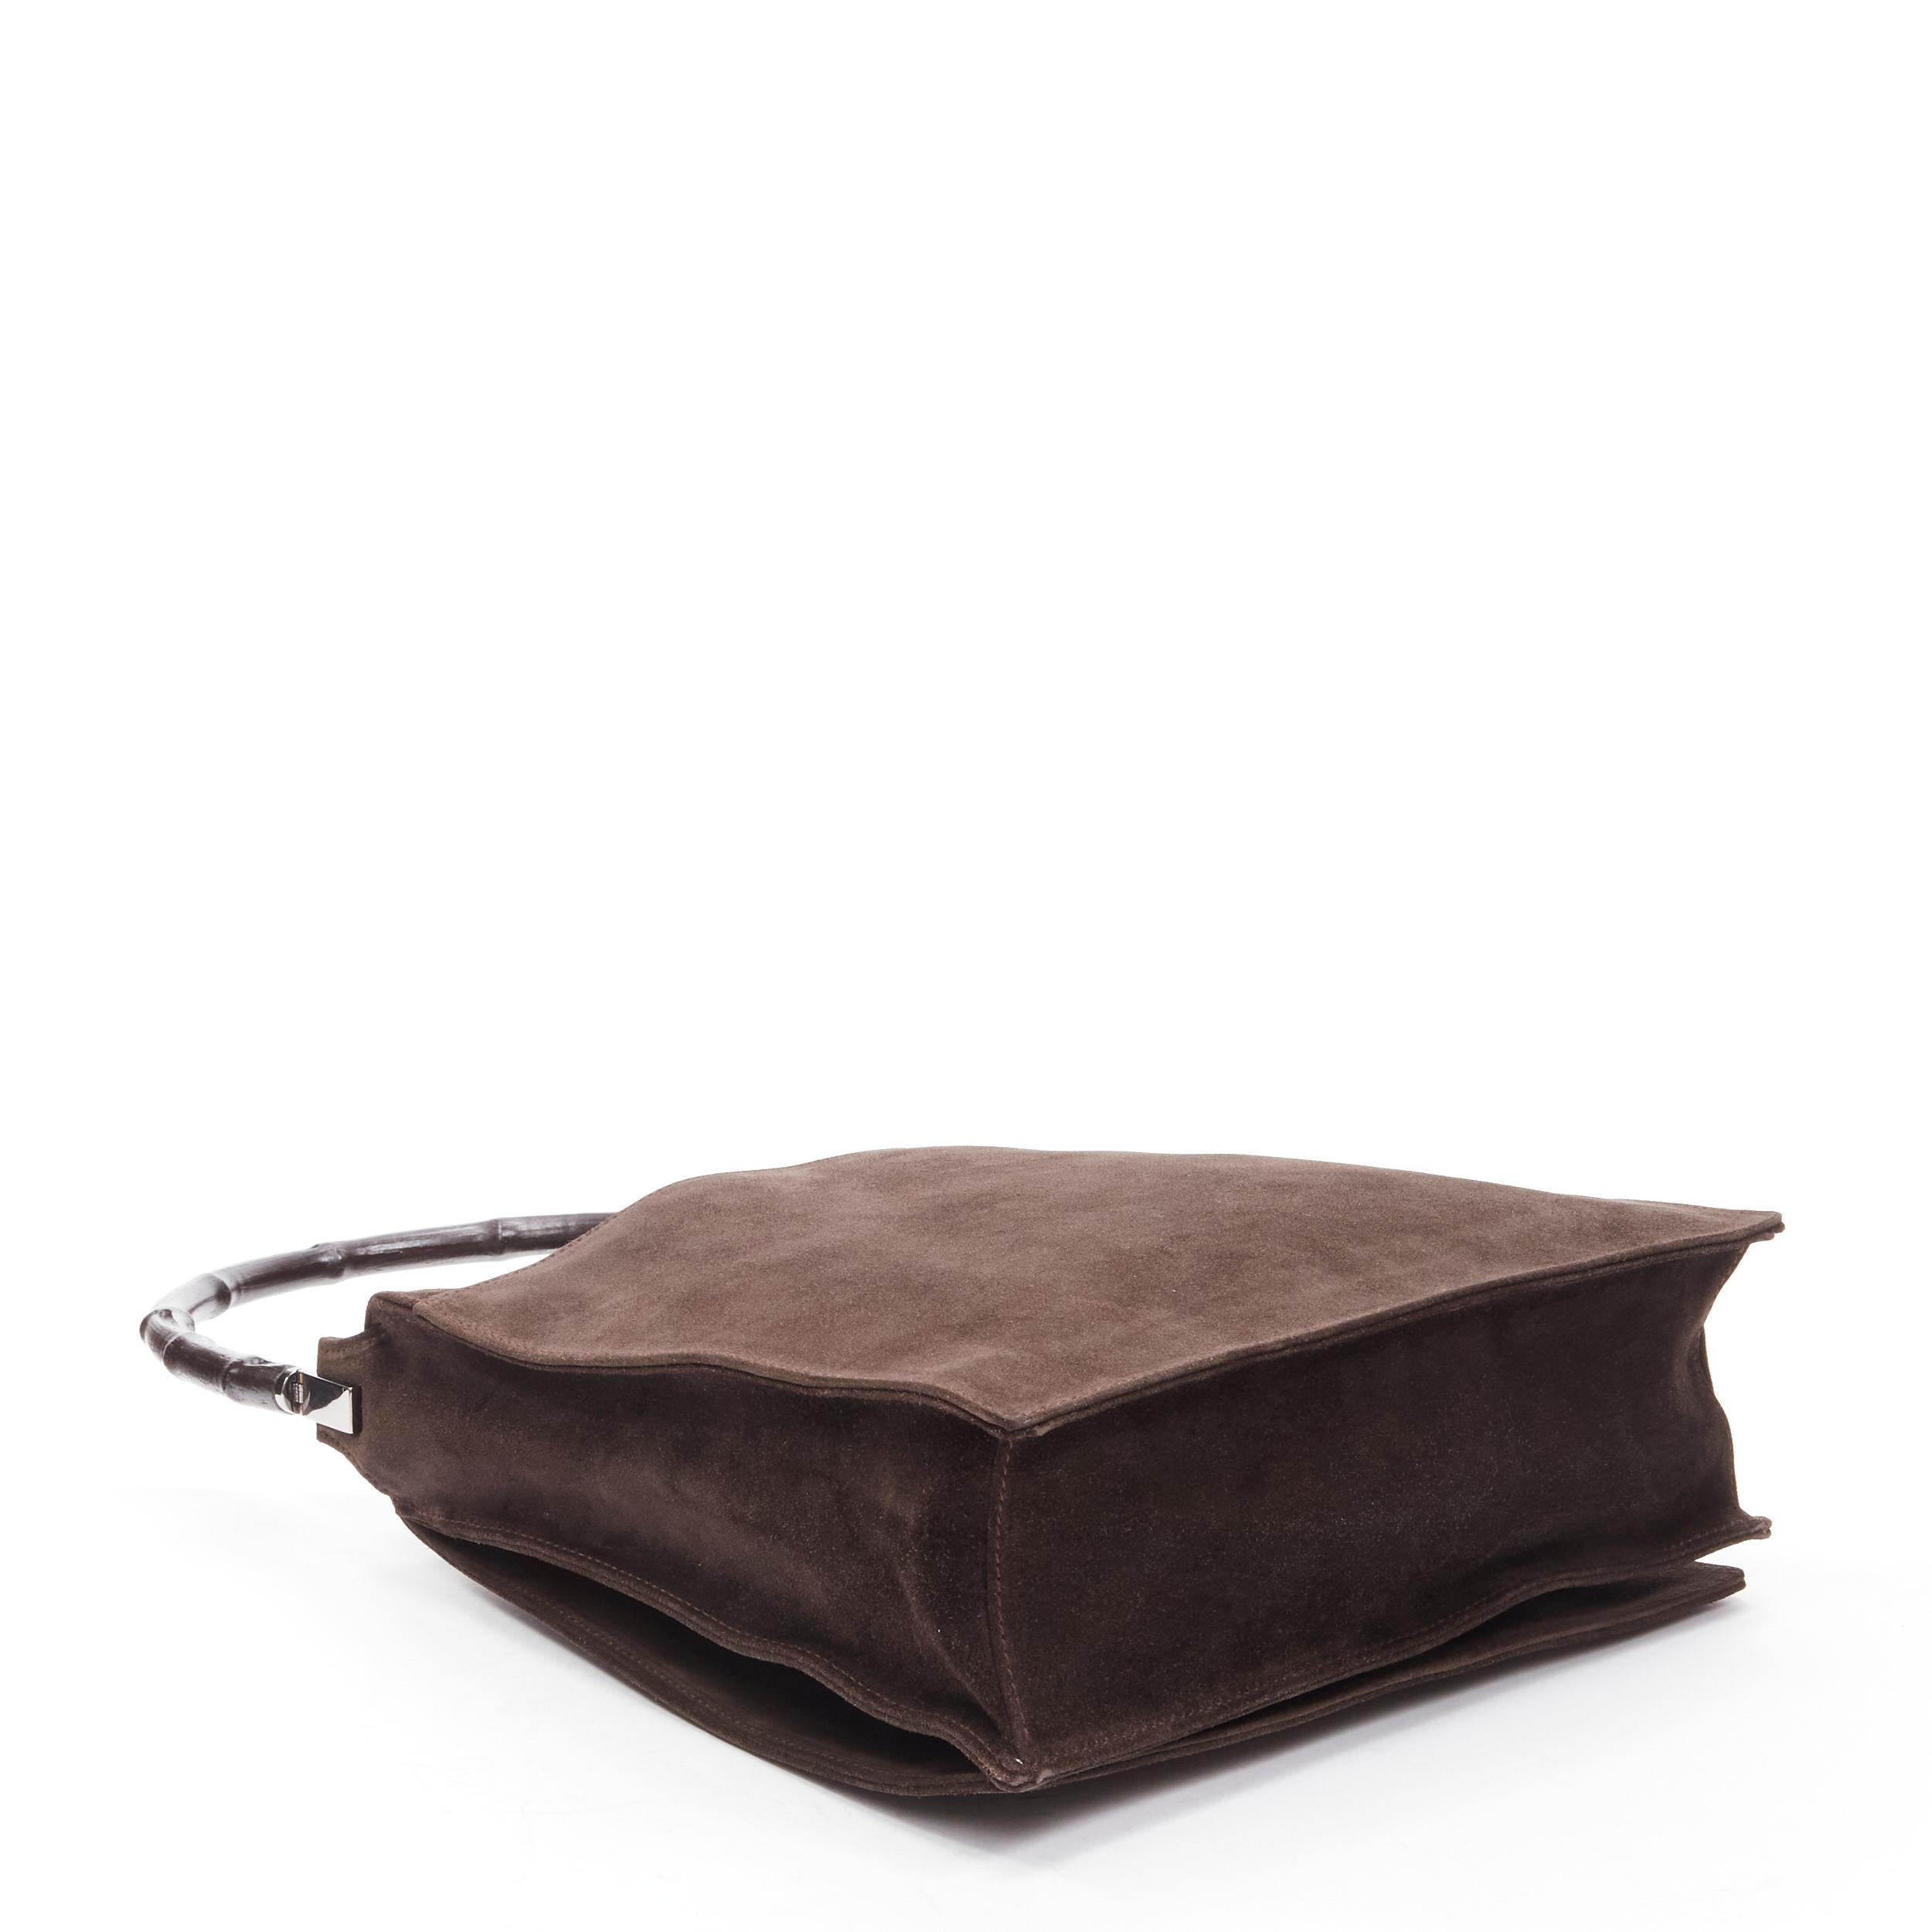 GUCCI Vintage brown bamboo handle suede leather flap shoulder bag For Sale 2